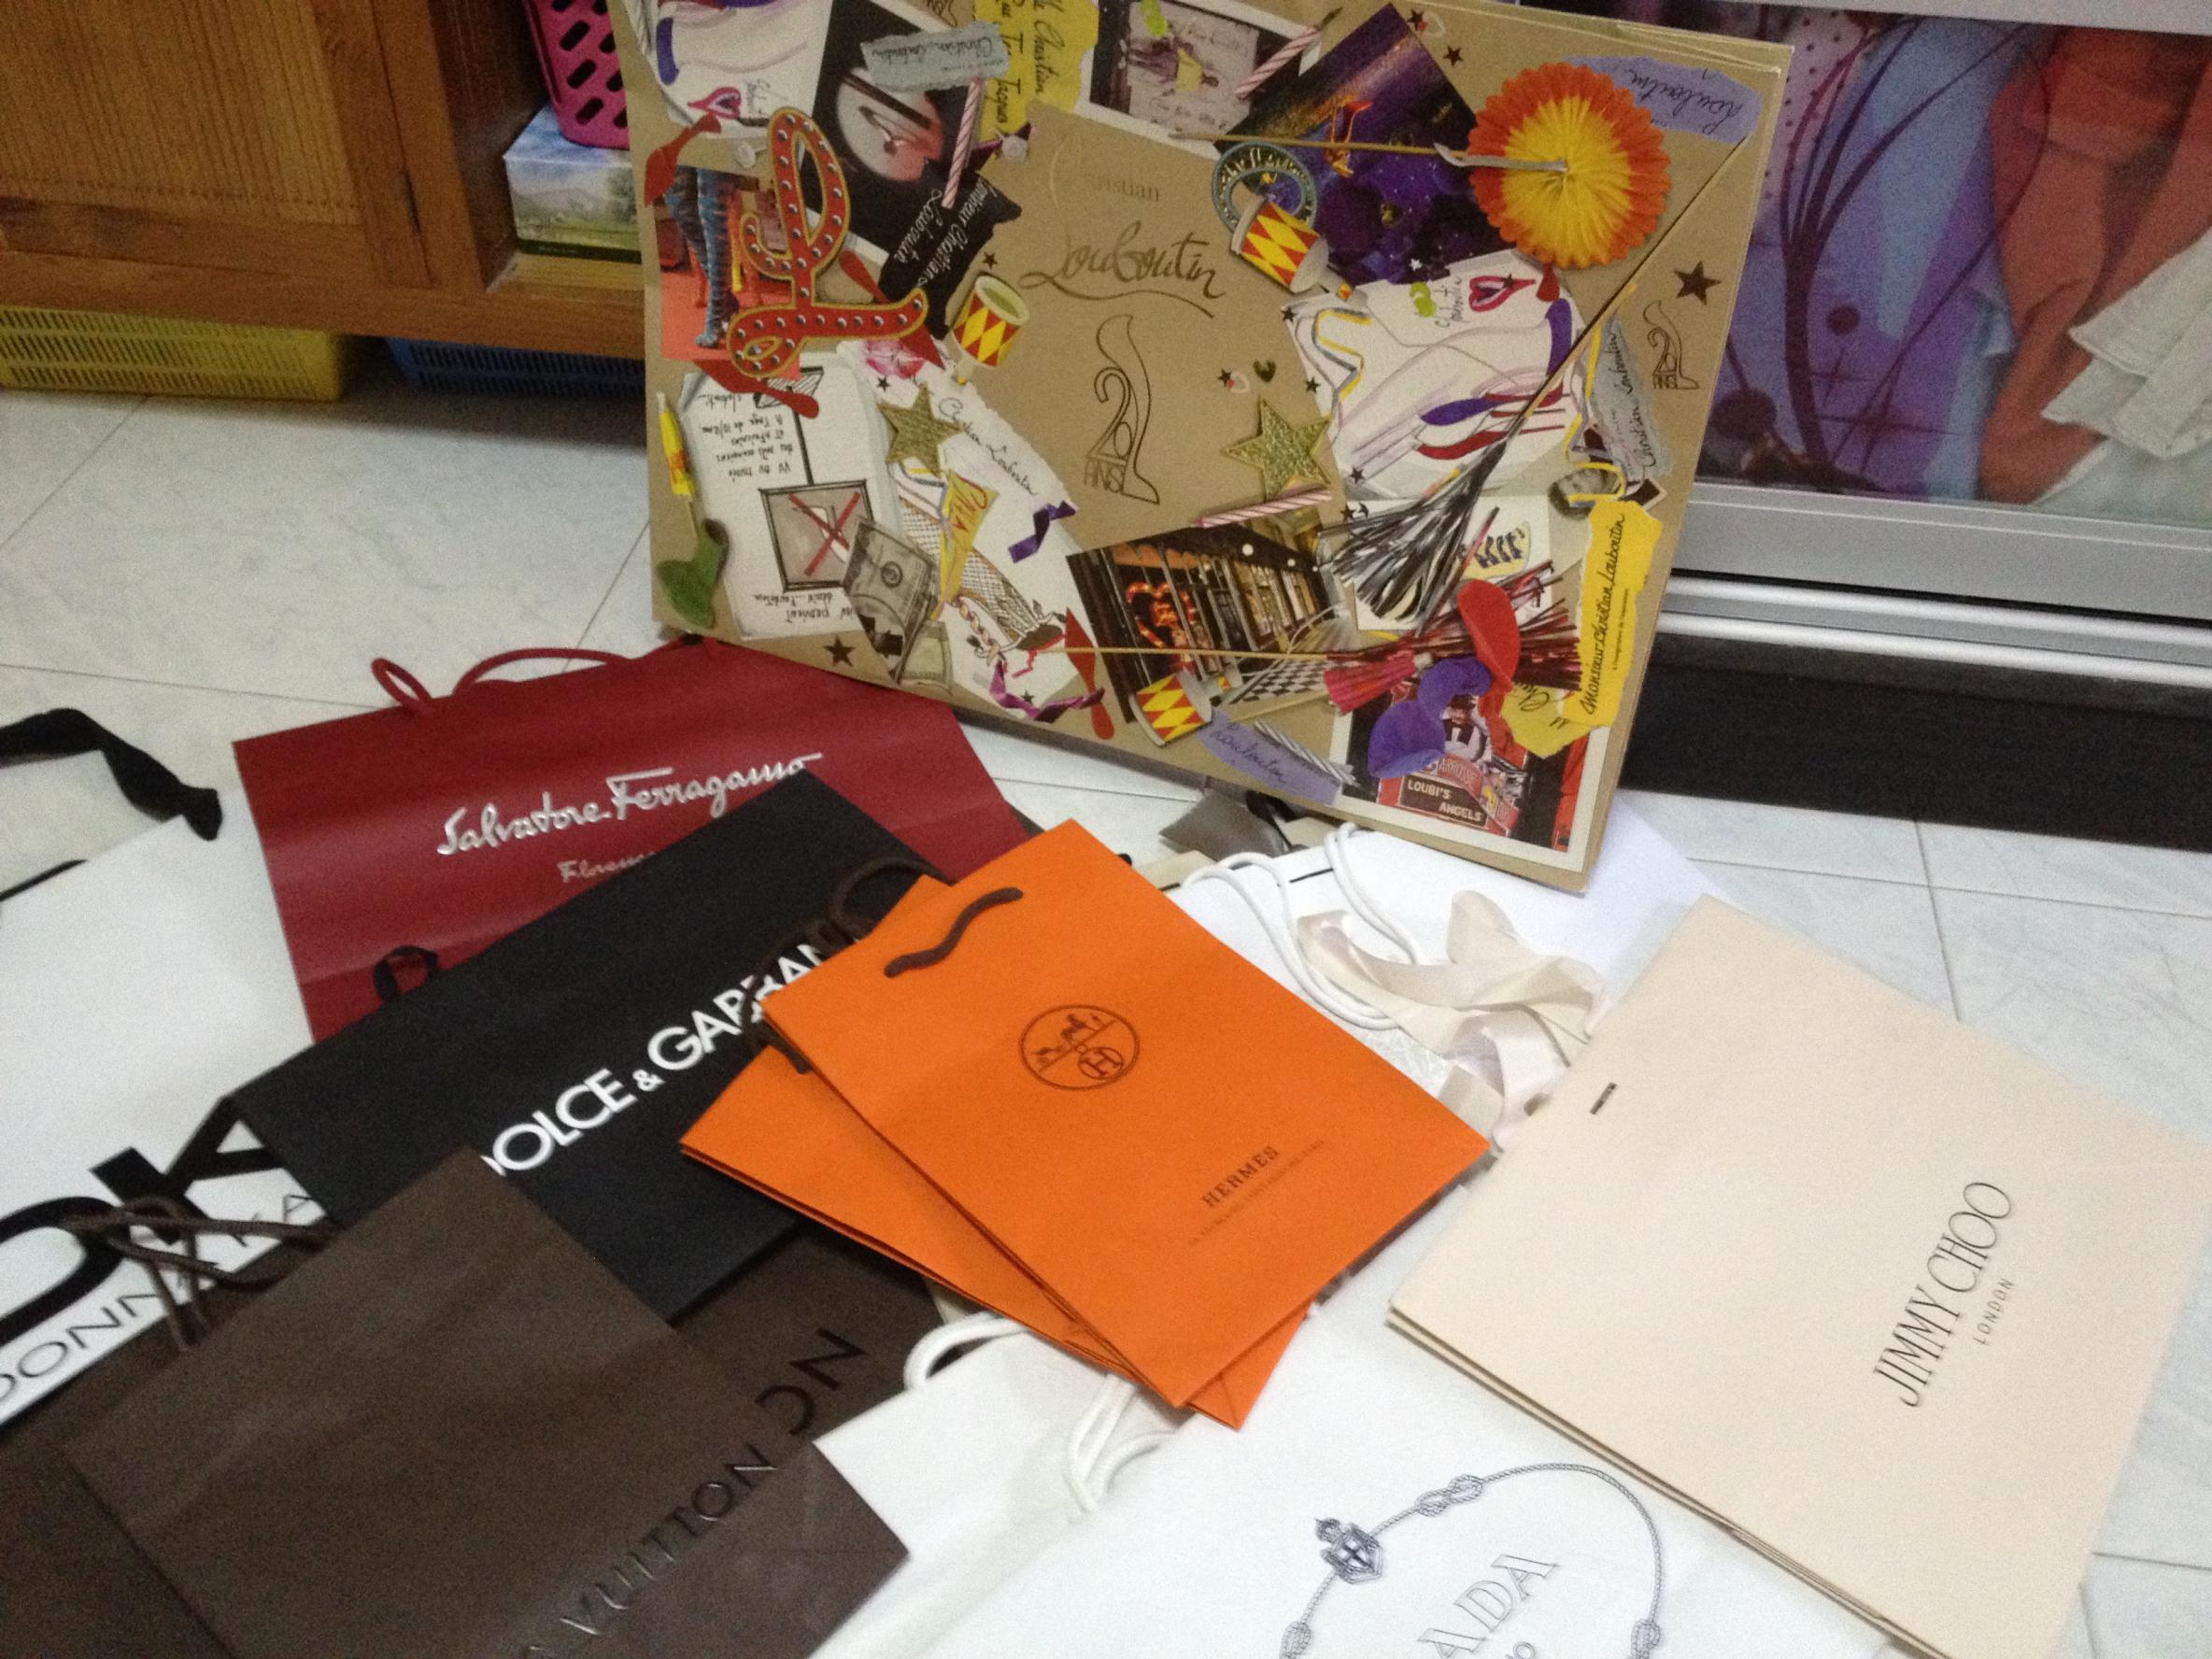 Designer Bags and Shoes Paper Shopper Bag